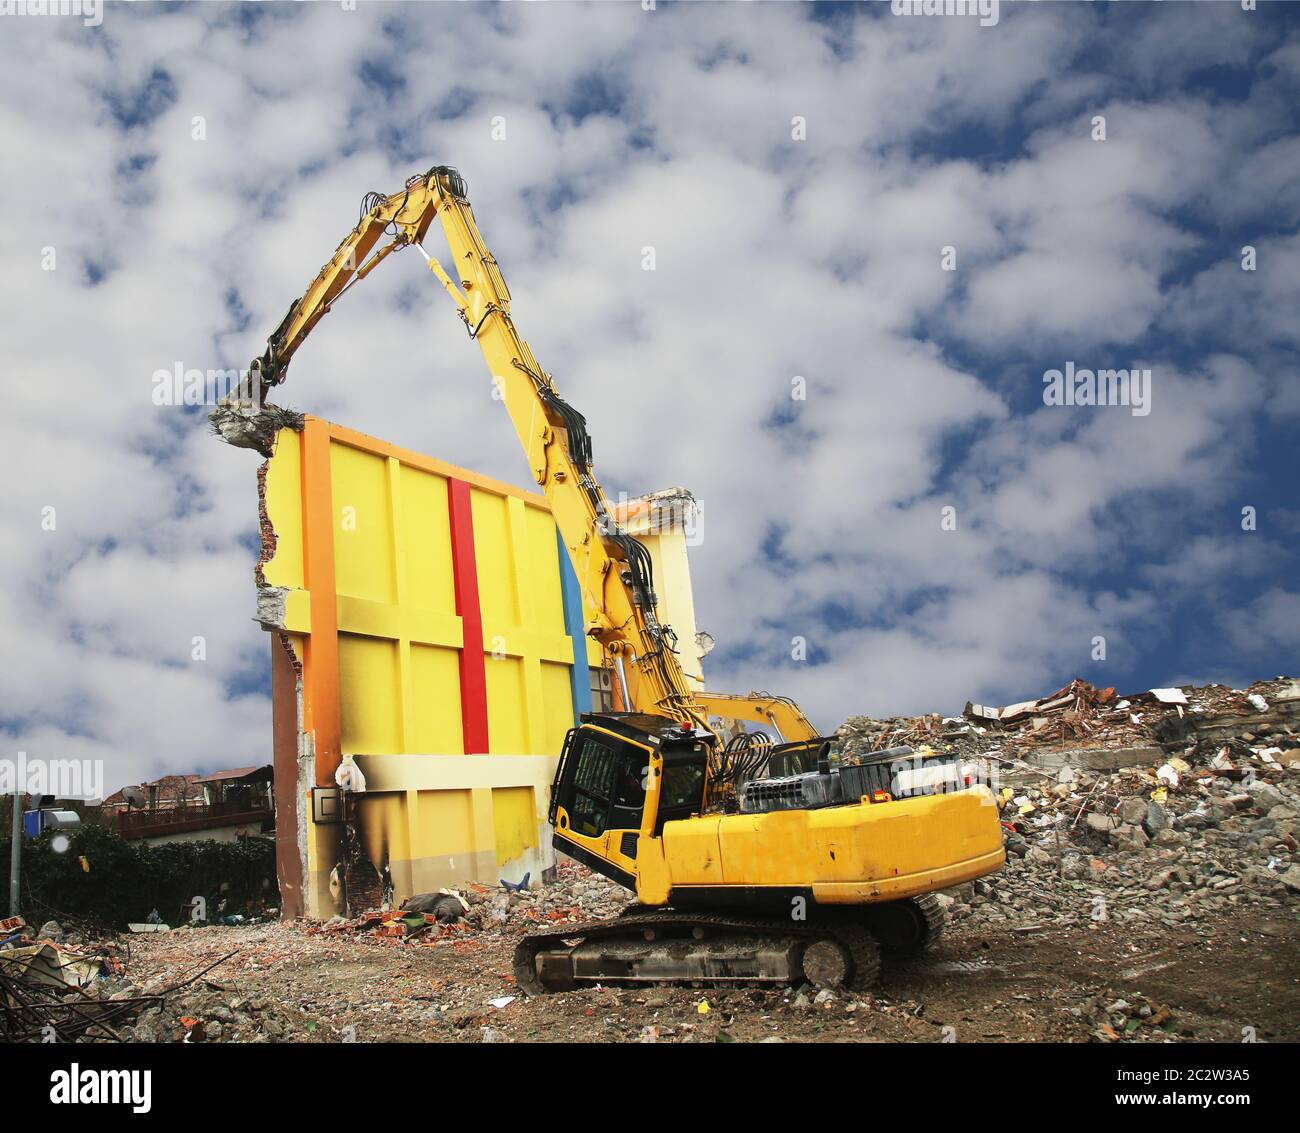 High reach demolition excavator working demolition site. Construction machinery demolishing building. Stock Photo